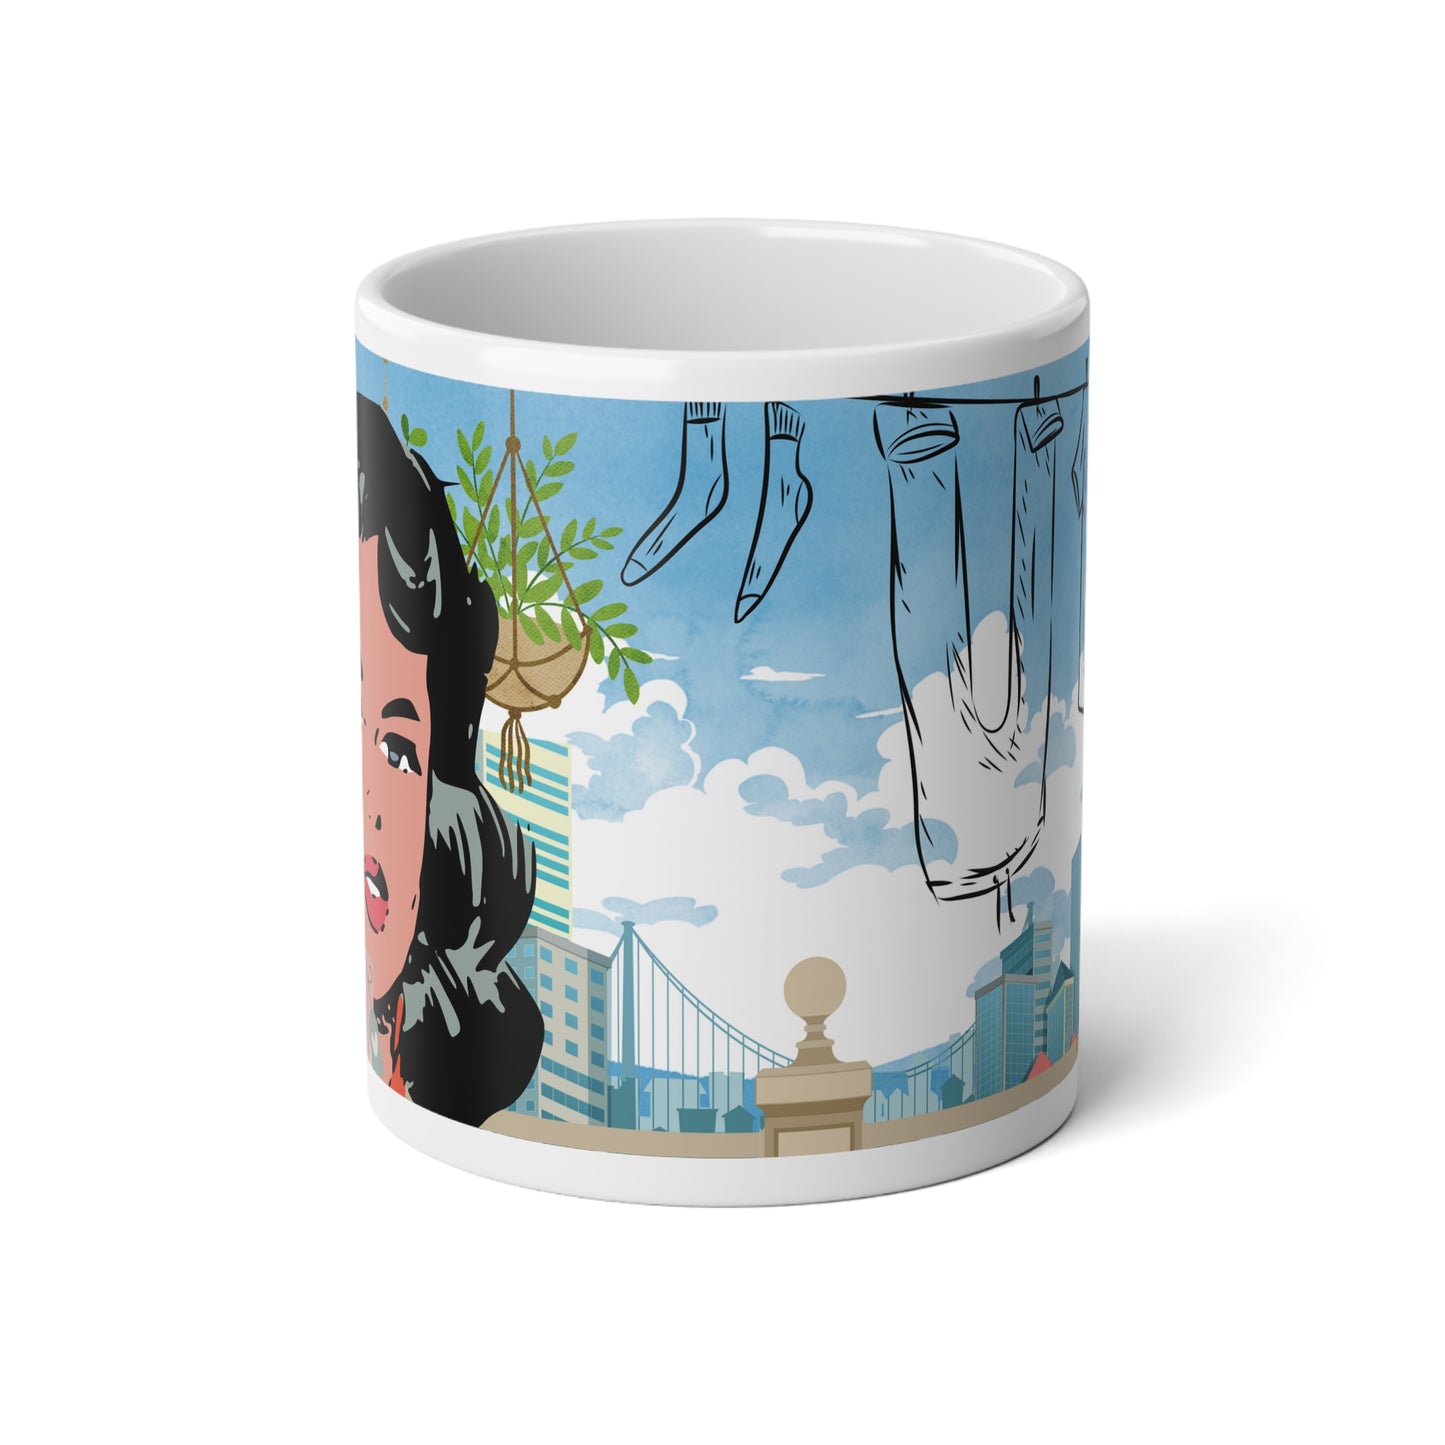 "Spill Tea On The Terrace" Jumbo Mug, 20oz